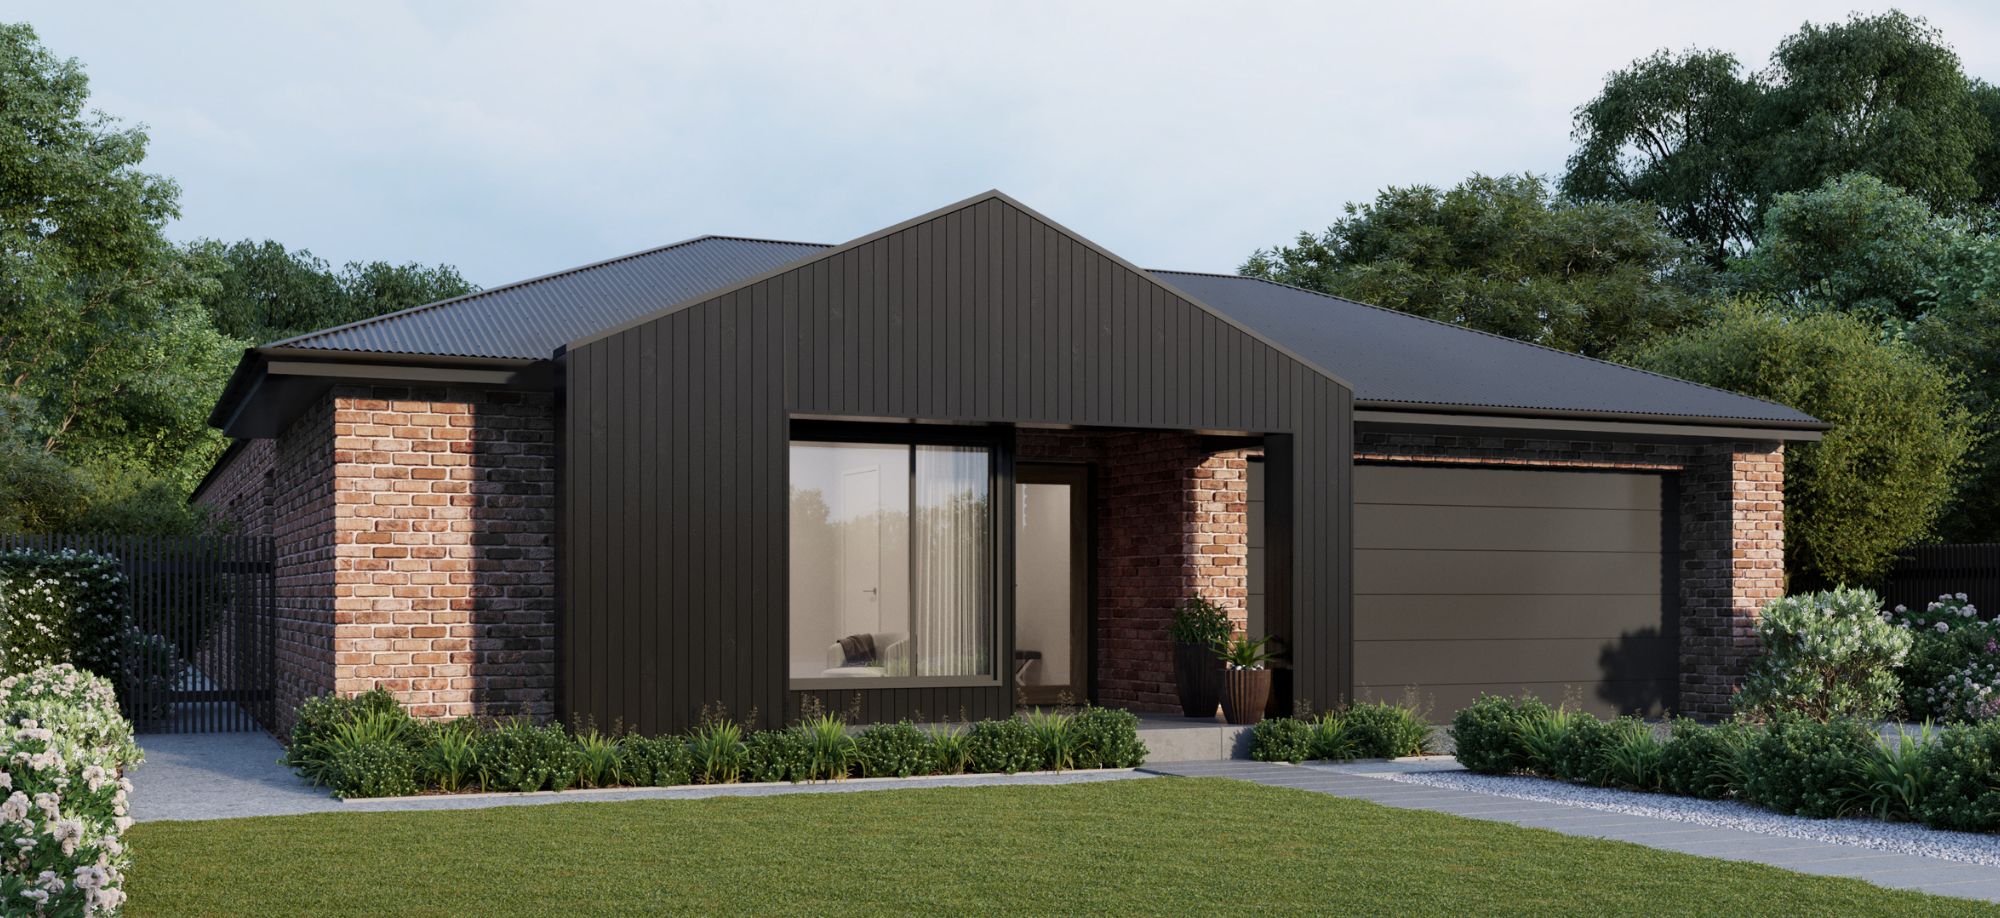 Modern facade and acreage design for Aspect range homes.